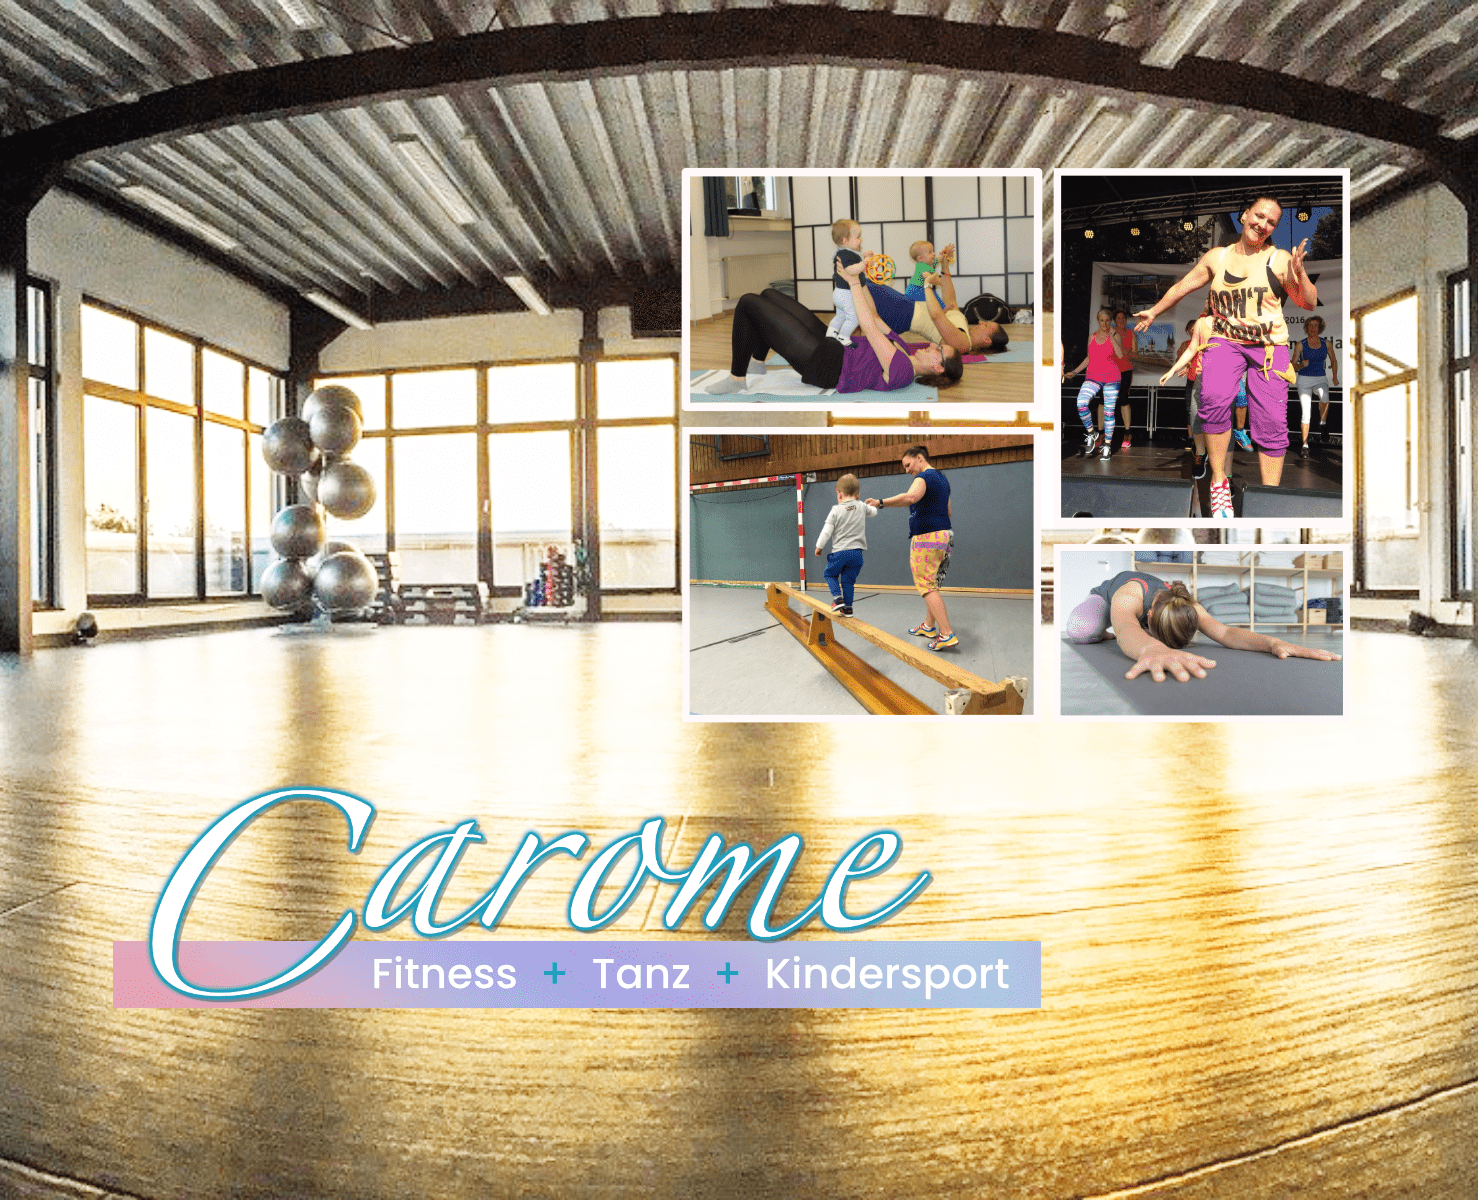 Carome -- Fitness-Tanz-Kindersport_Header Startseite_Mobil